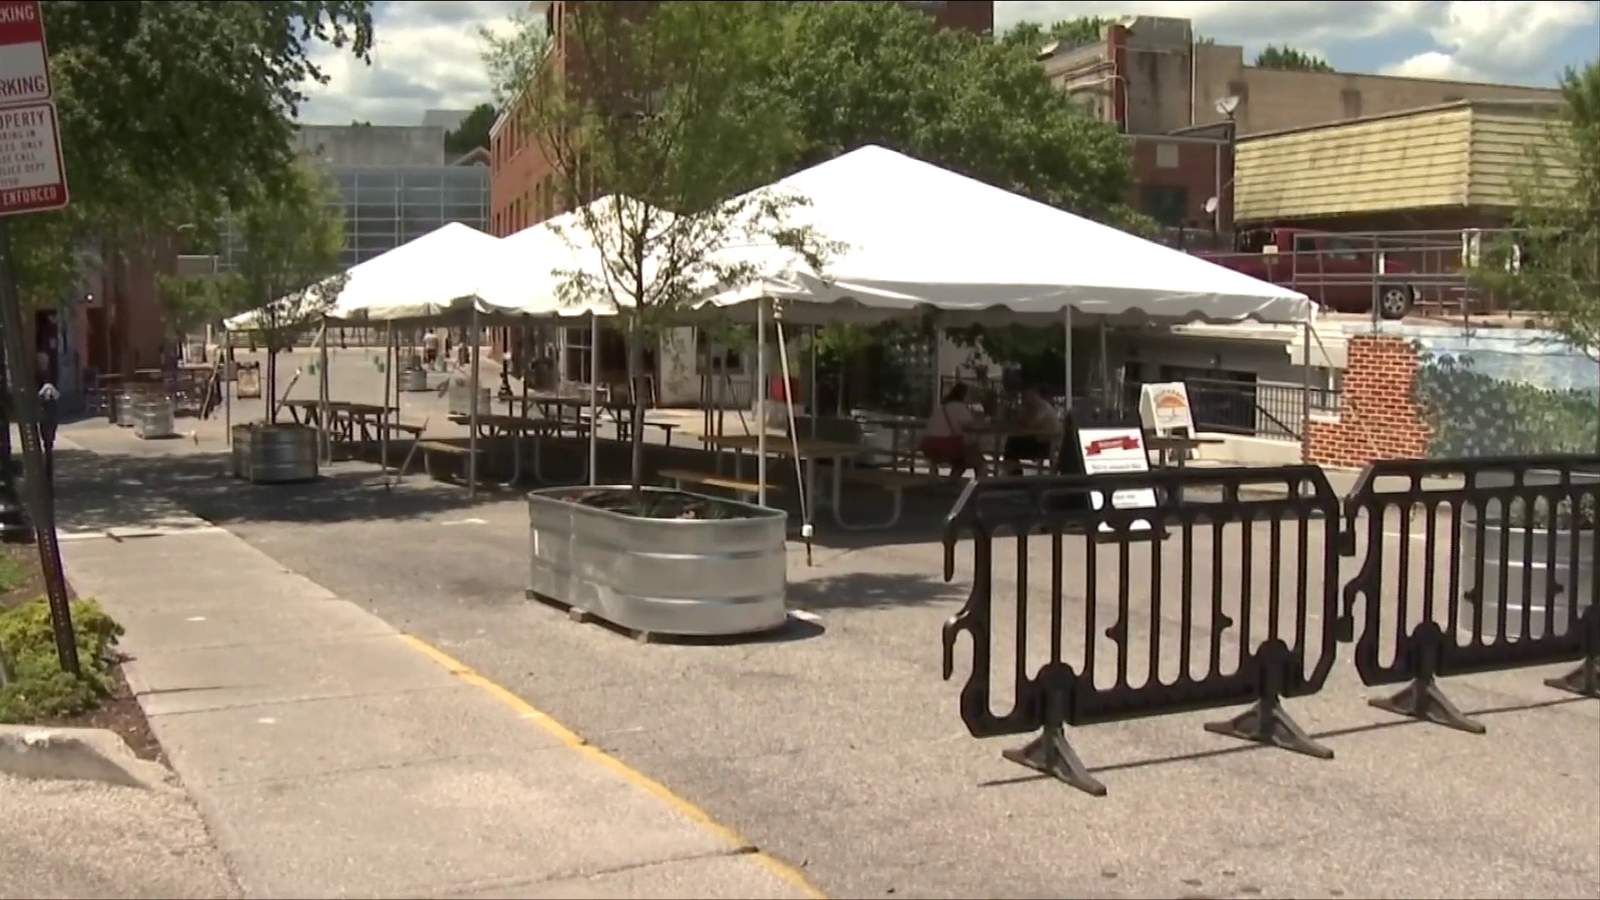 Blacksburg closes portion of street for public dining area